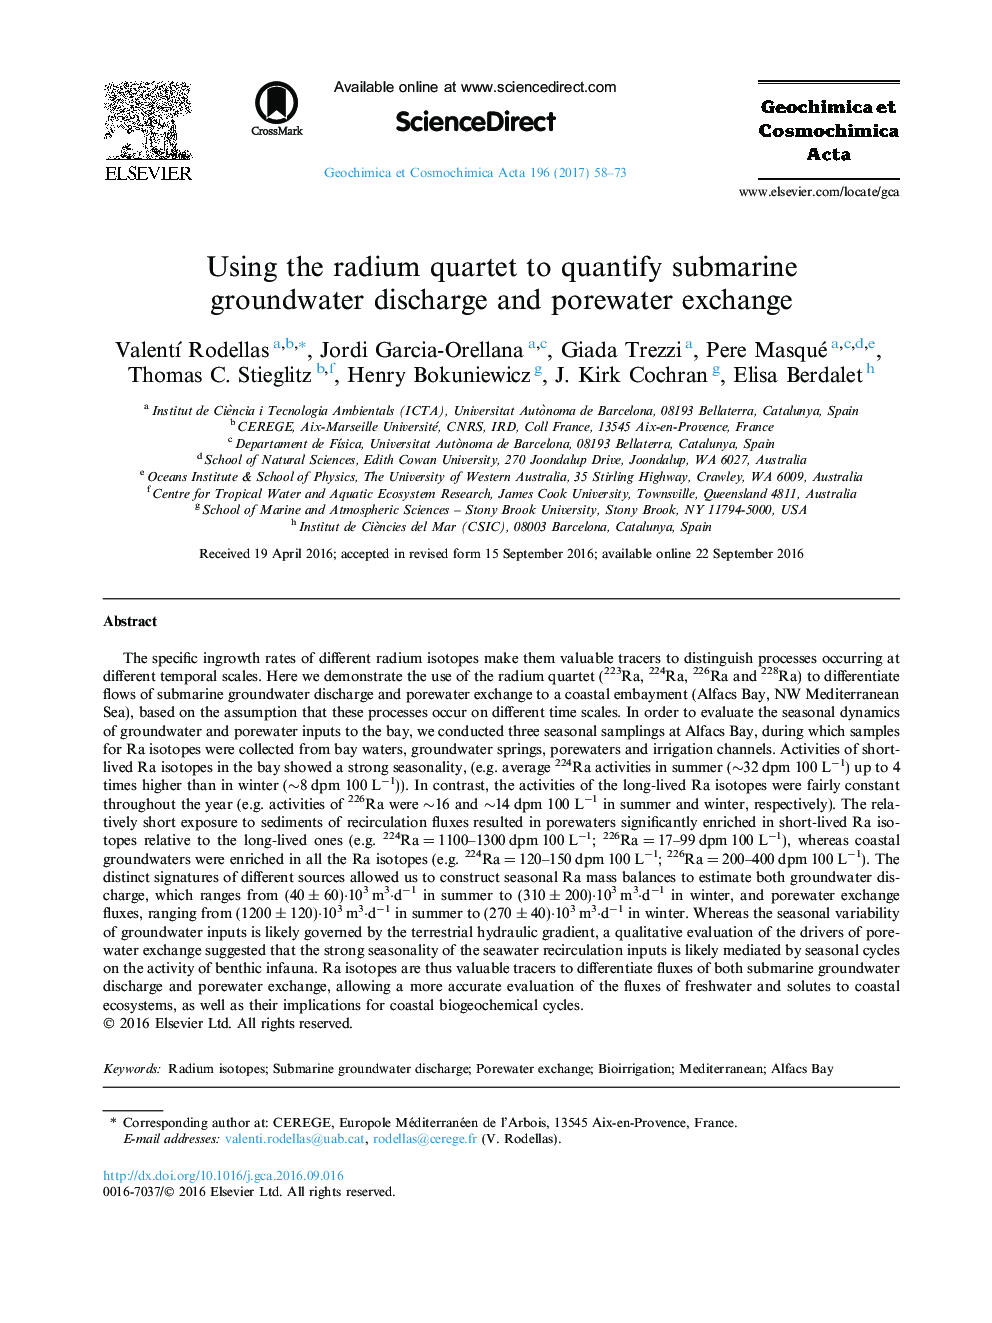 Using the radium quartet to quantify submarine groundwater discharge and porewater exchange